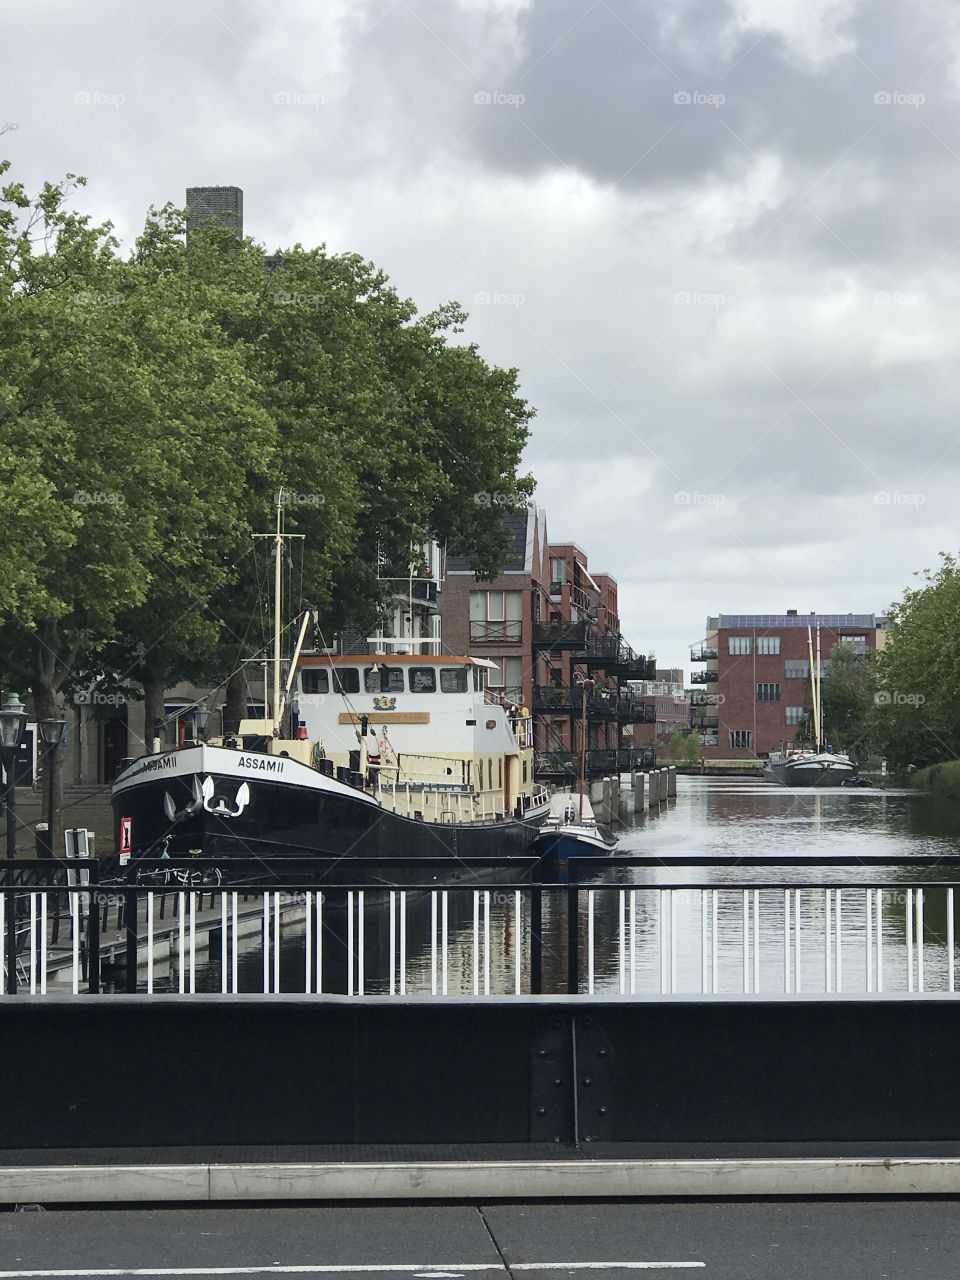 Tug boat
Water
Canal
Netherlands 
Rotterdam 